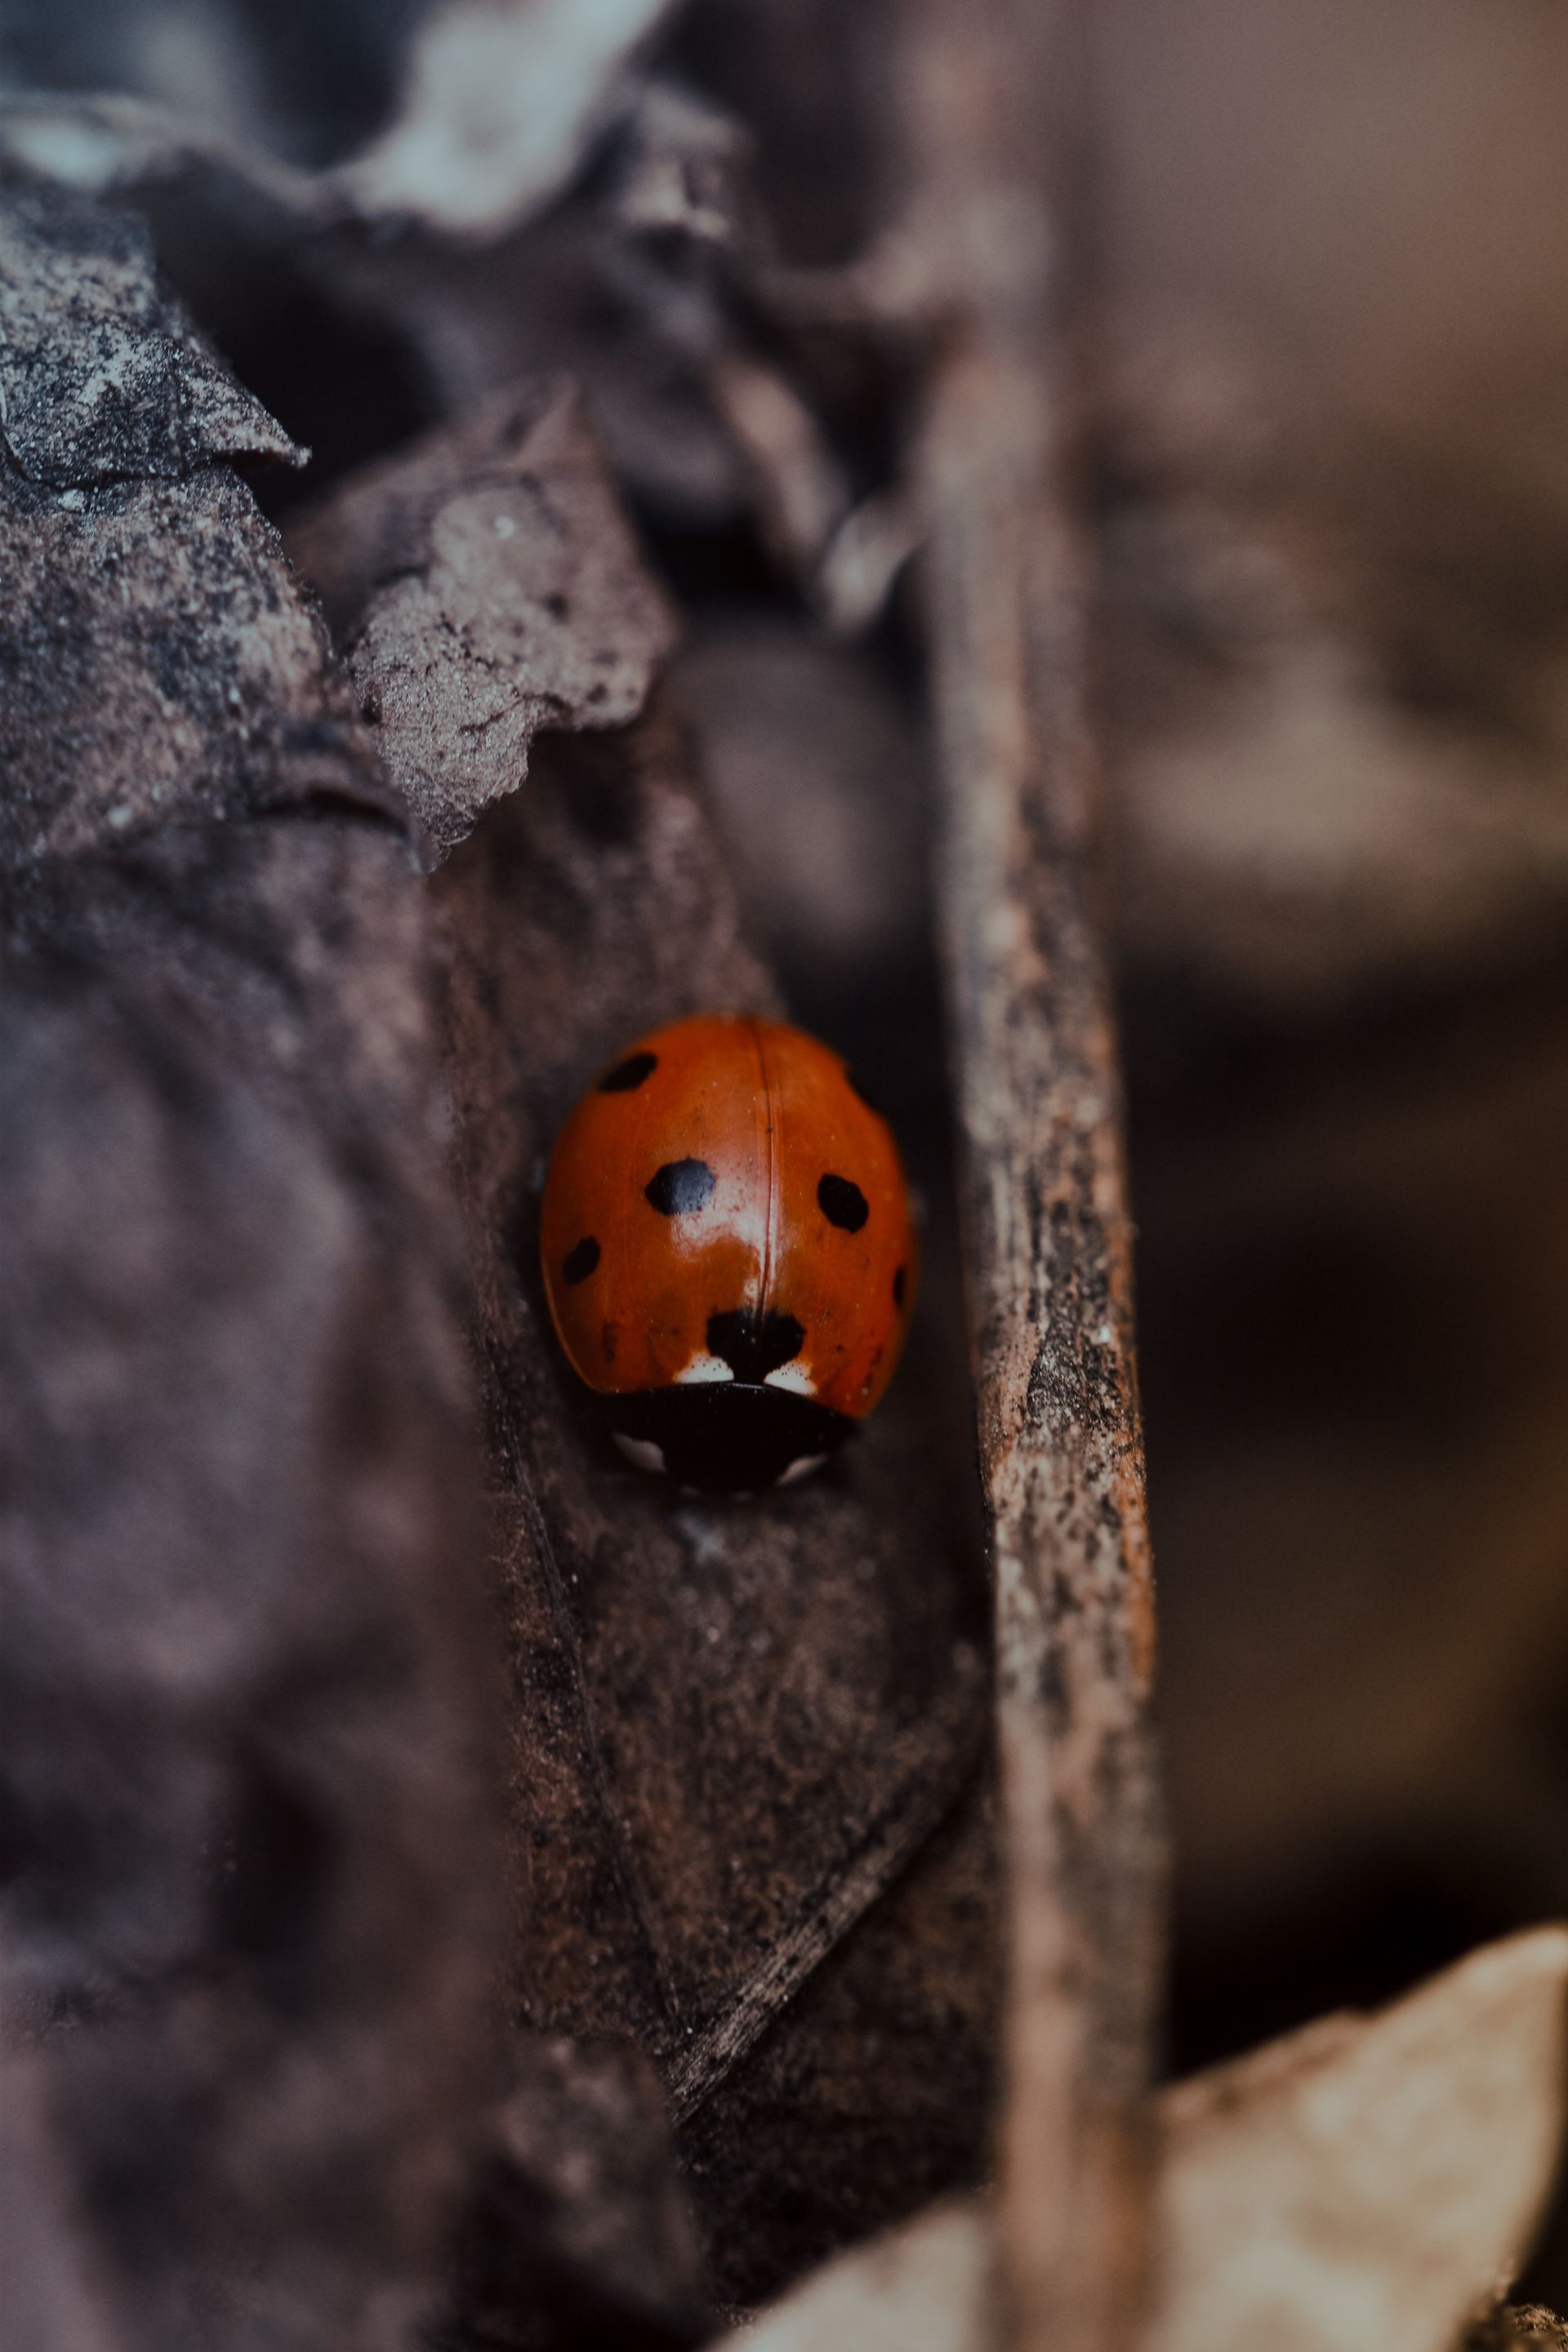 A close up of a ladybug hibernating